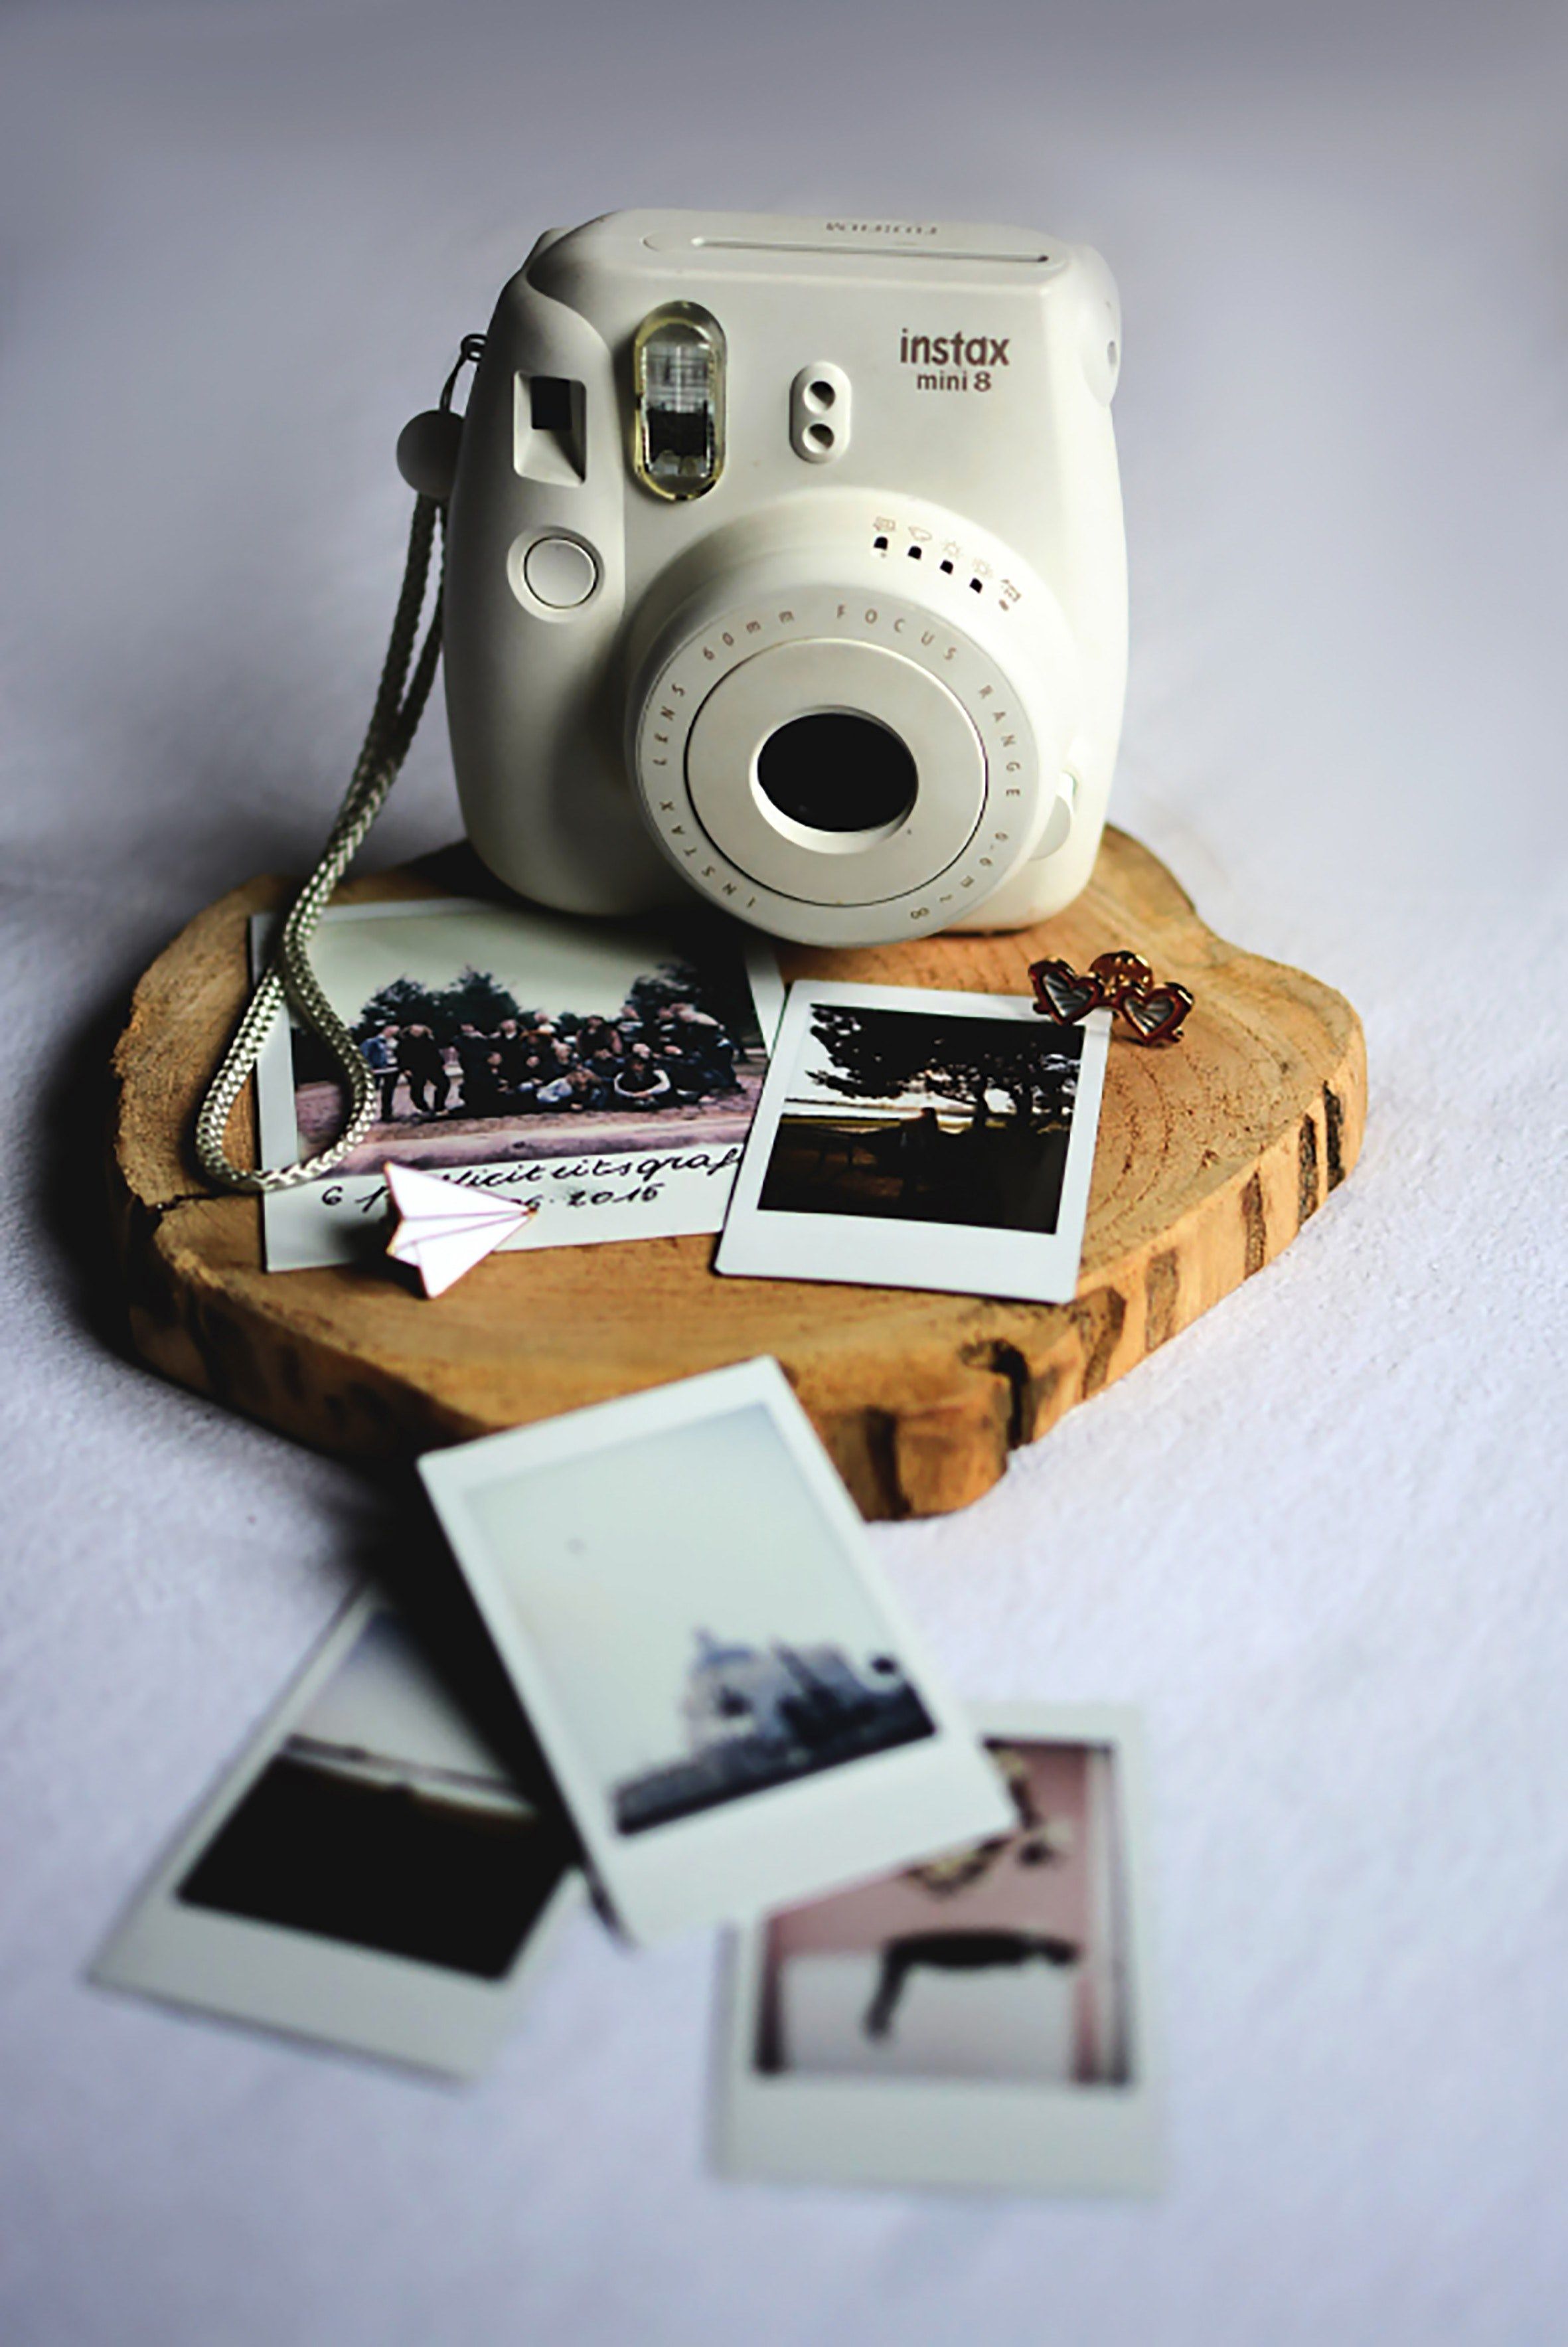 Polaroid Camera Wallpapers